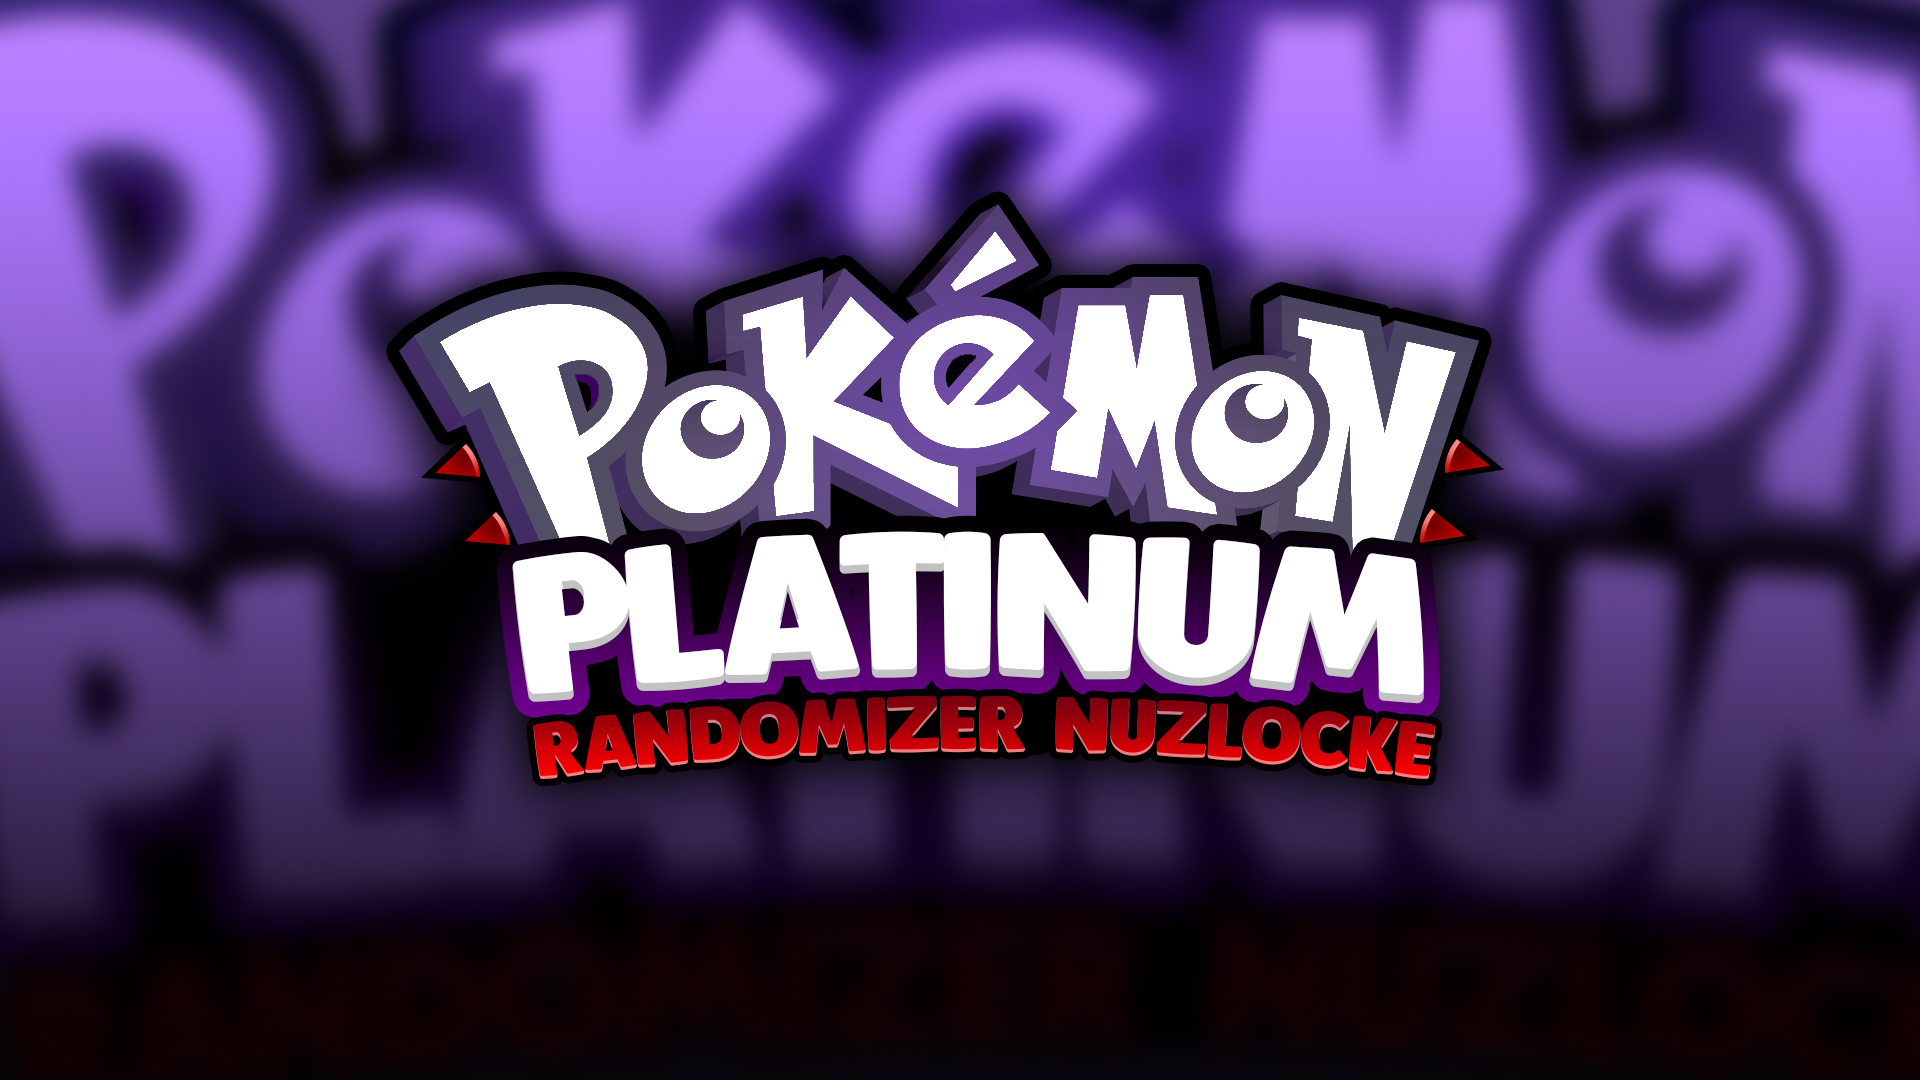 Pokemon Platinum Randomizer Nuzlocke Cover by newgameaddsign on DeviantArt